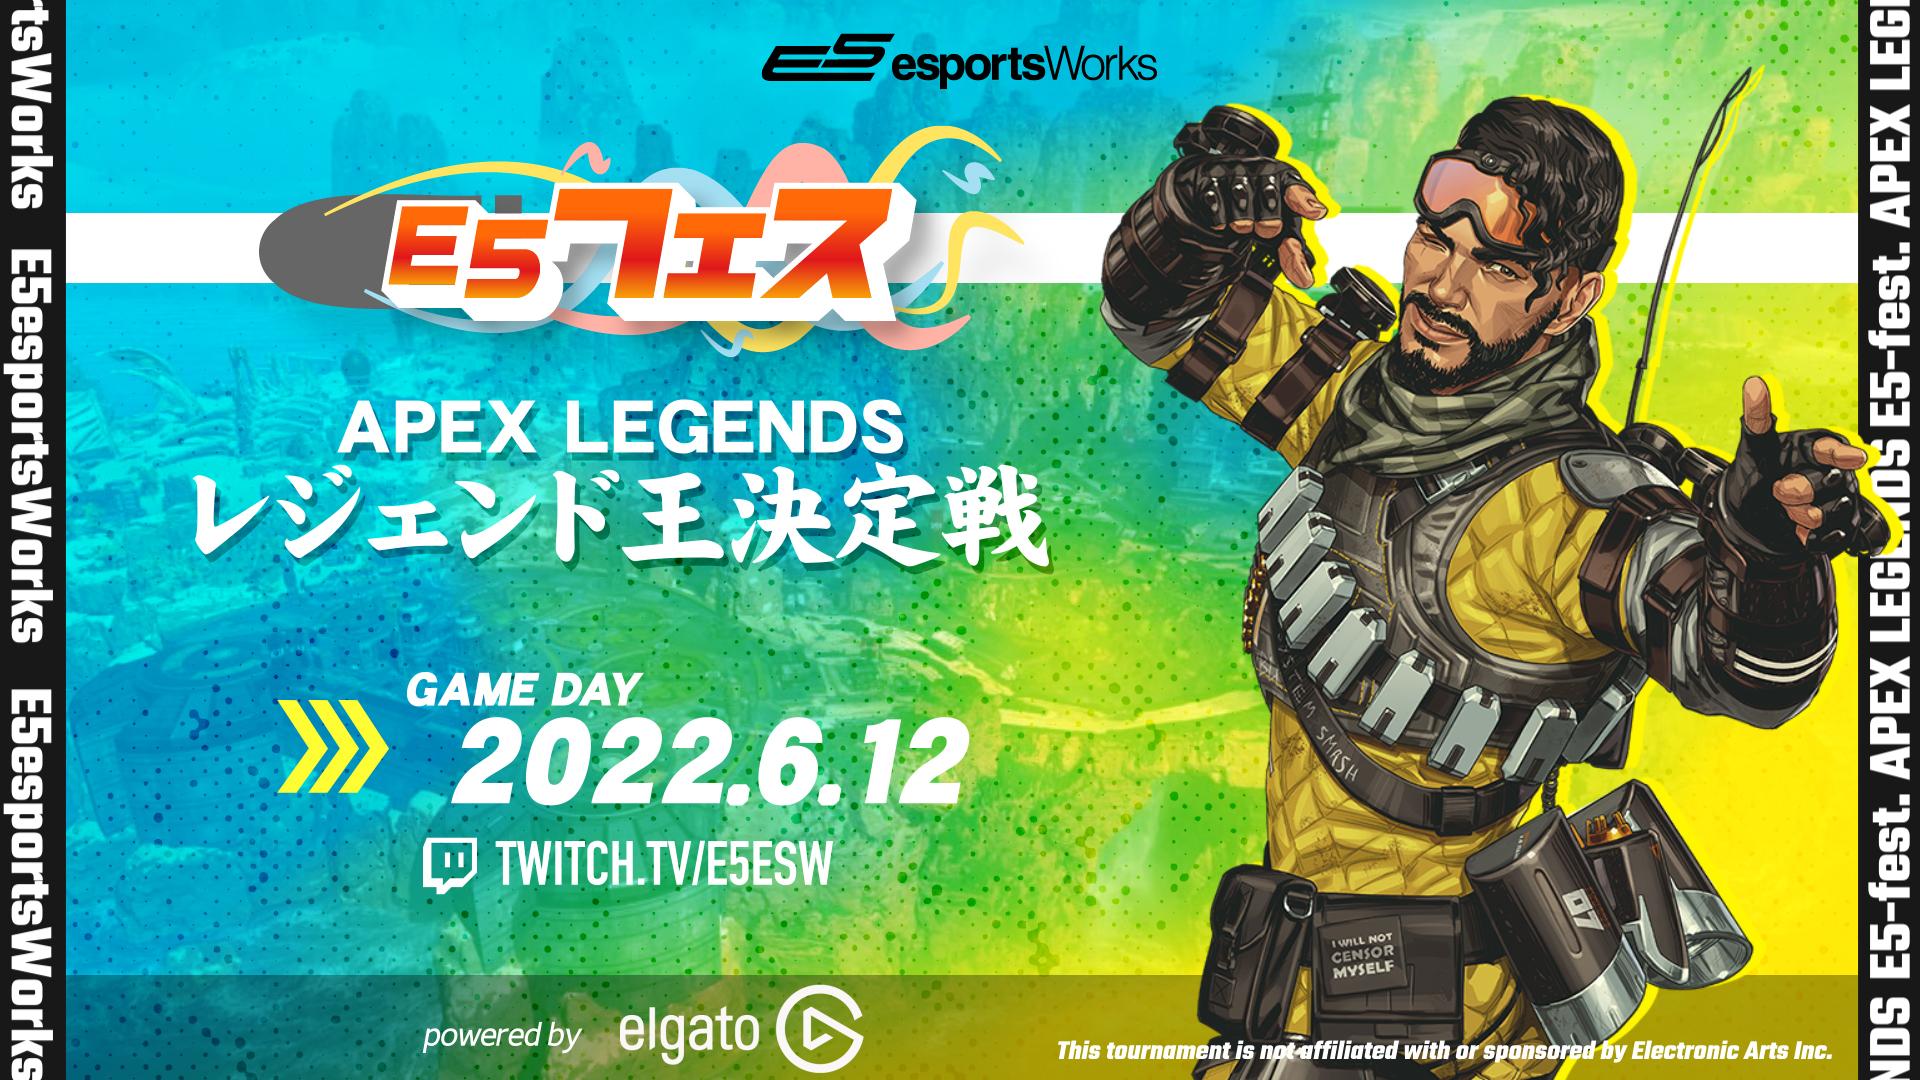 E5フェス Apex Legends 第2回 レジェンド王決定戦 powered by Elgatoの見出し画像